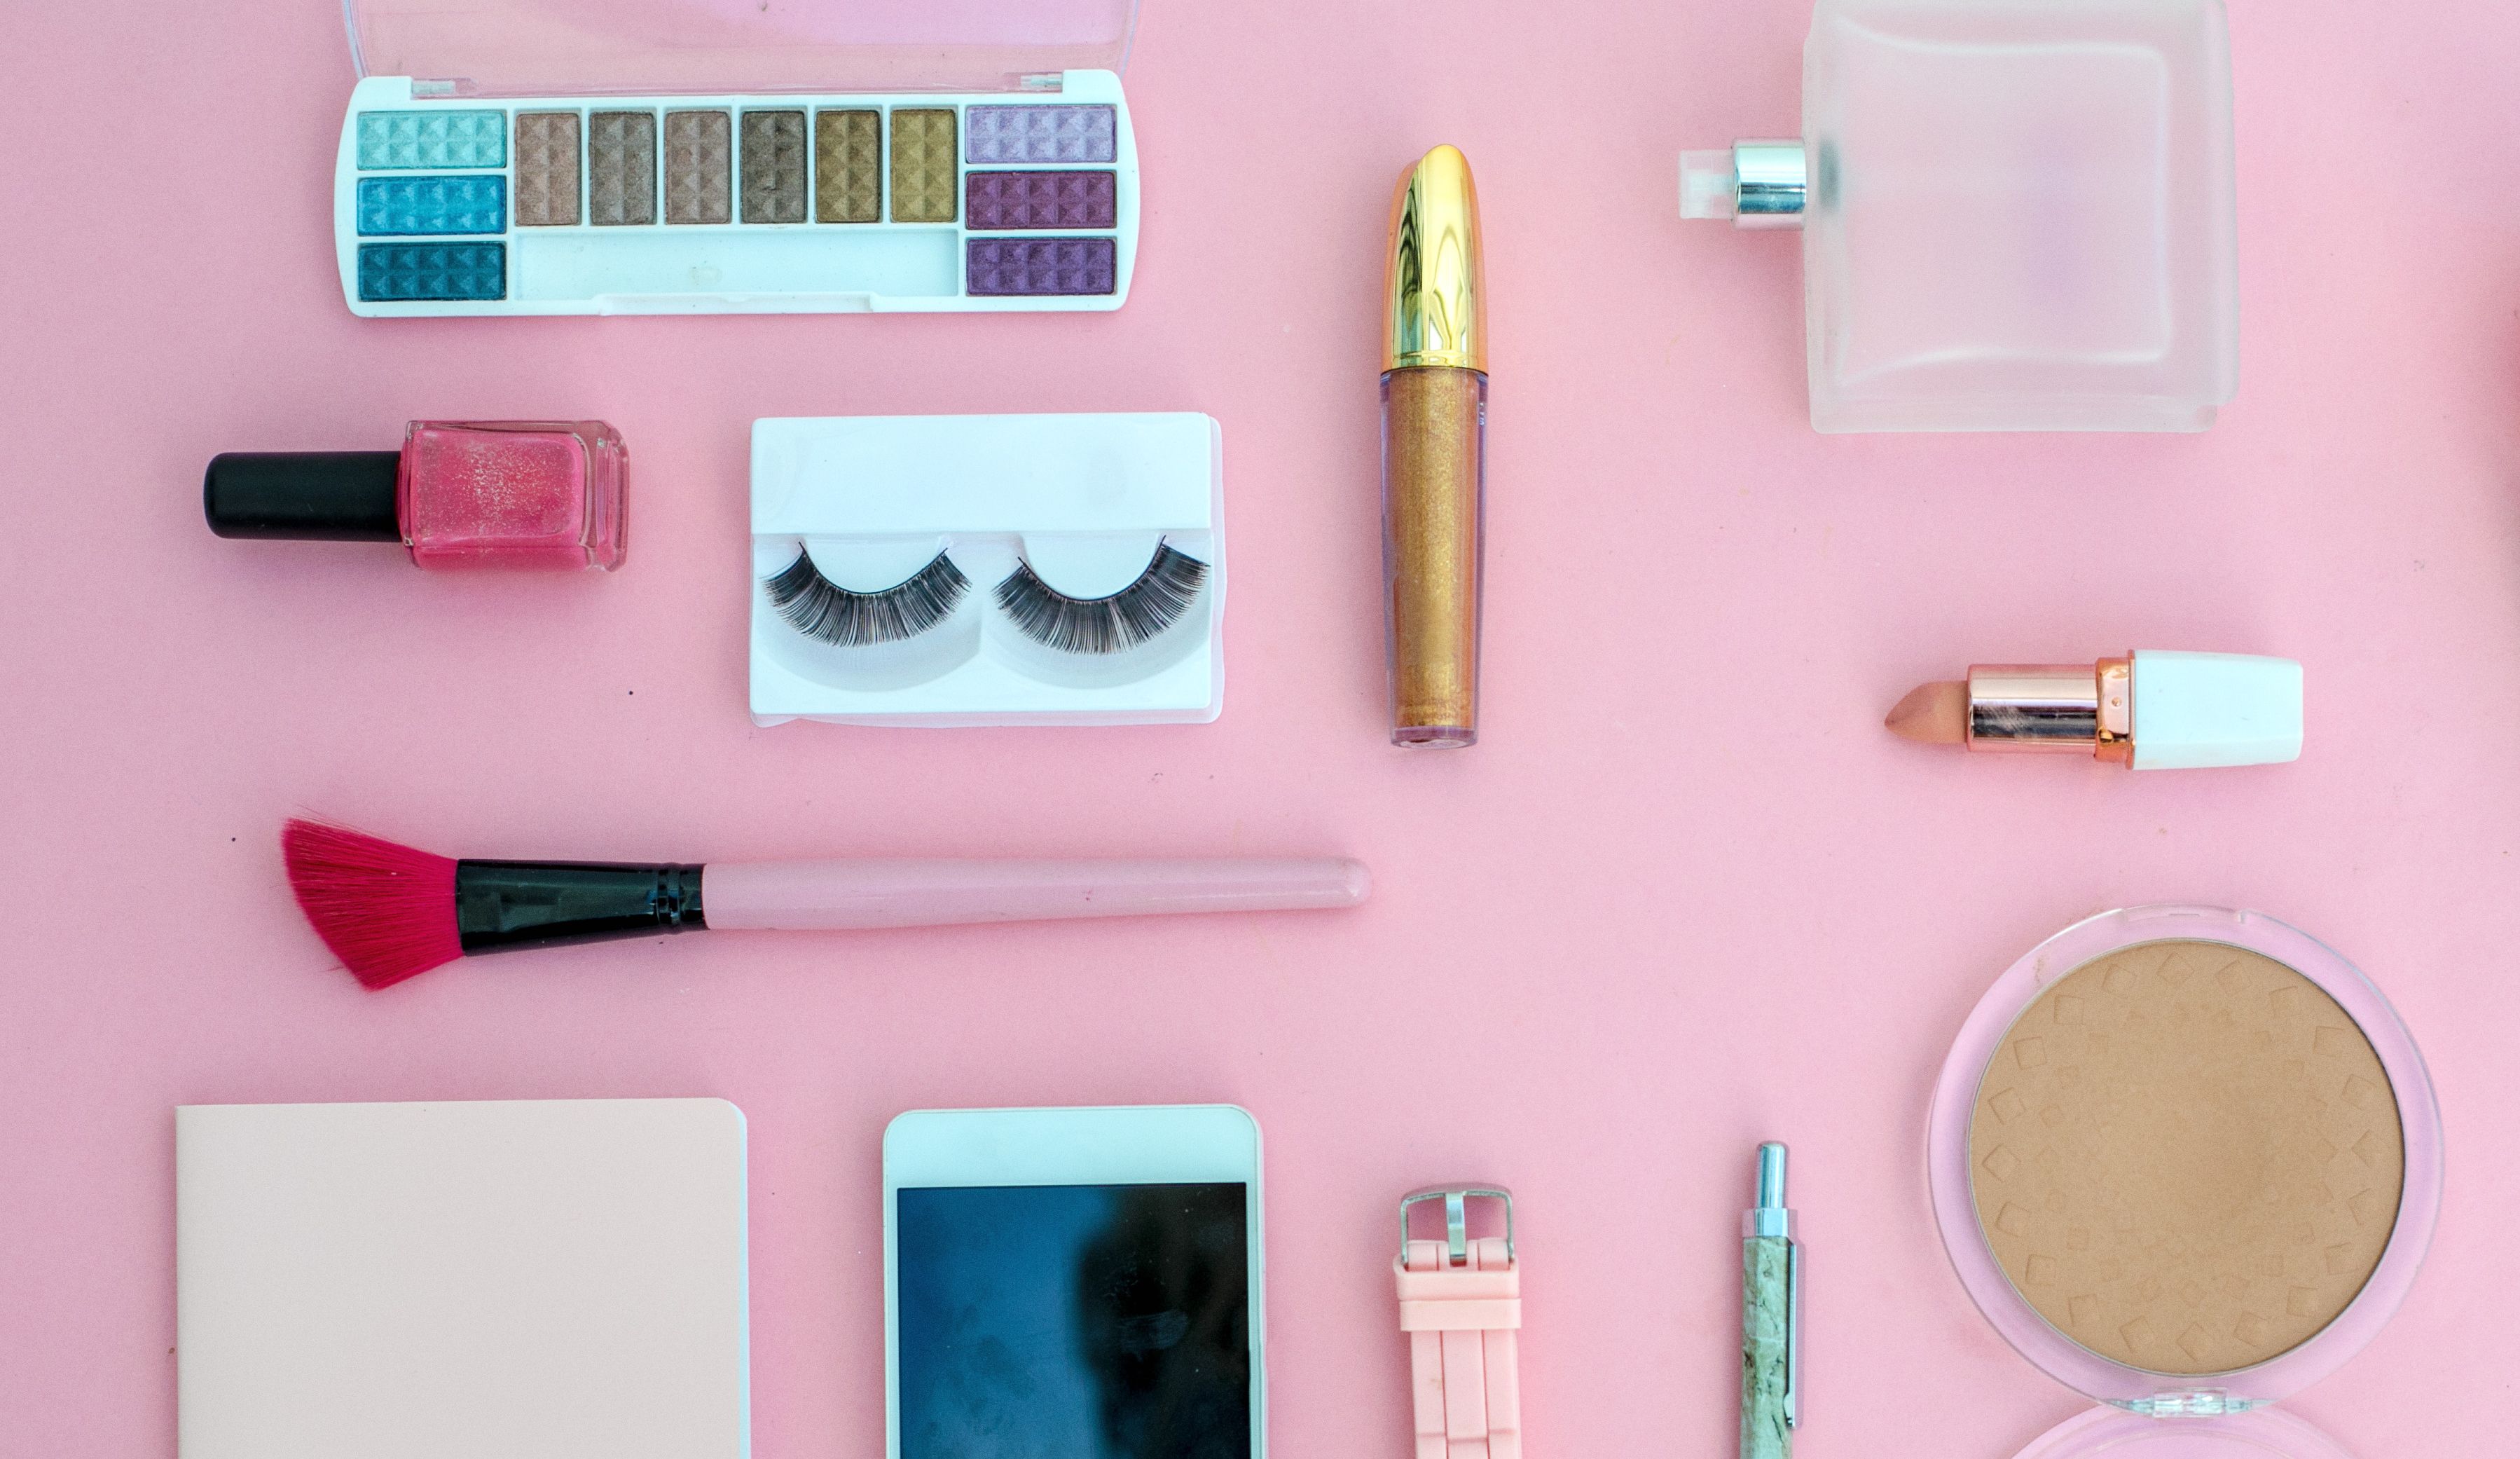 12 Best Makeup Tip for Beginners - How to Apply Makeup Tutorial Video